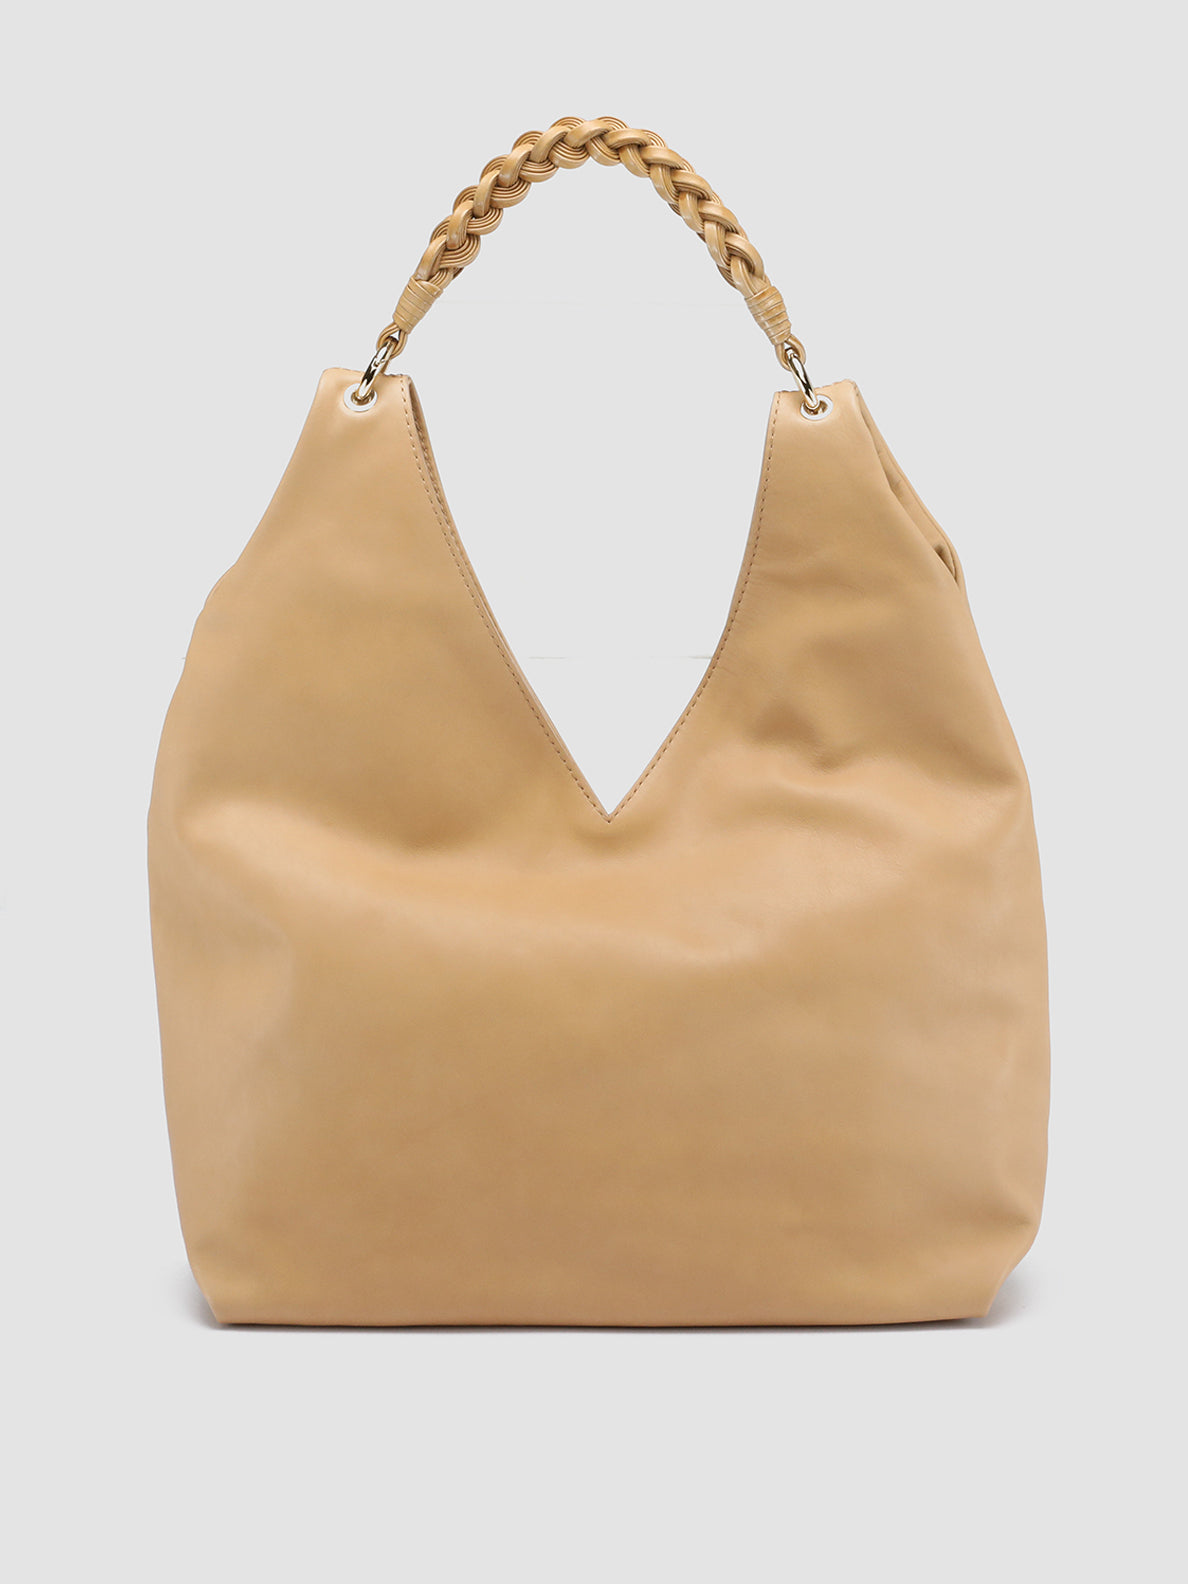 Callie Large Hobo Bag